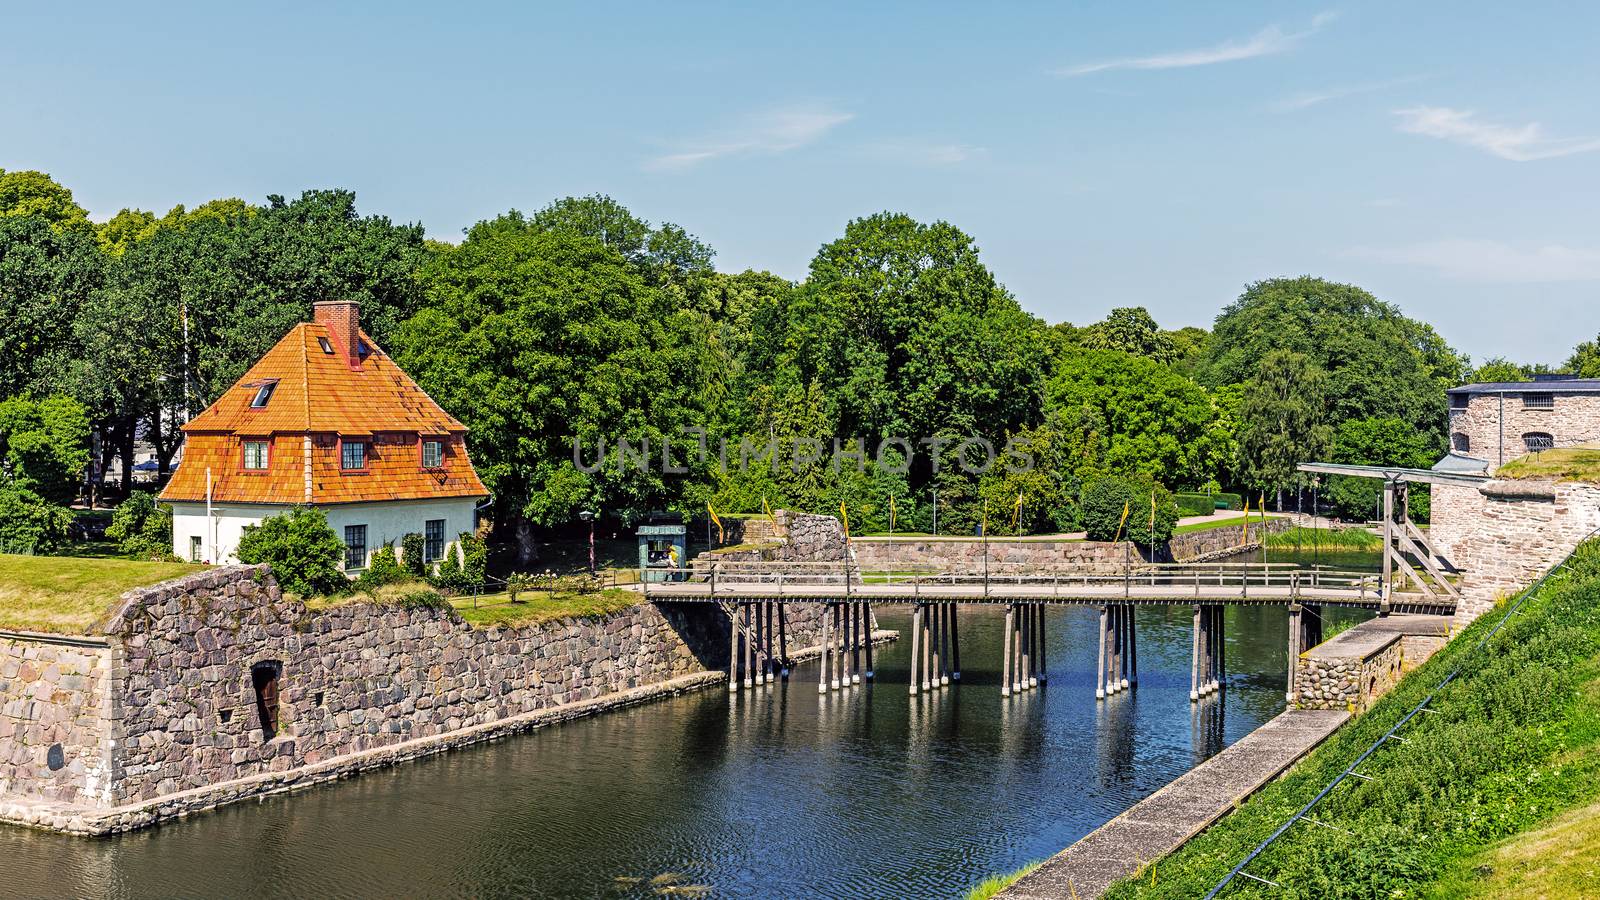 View on the moat and bascule bridge by pawel_szczepanski